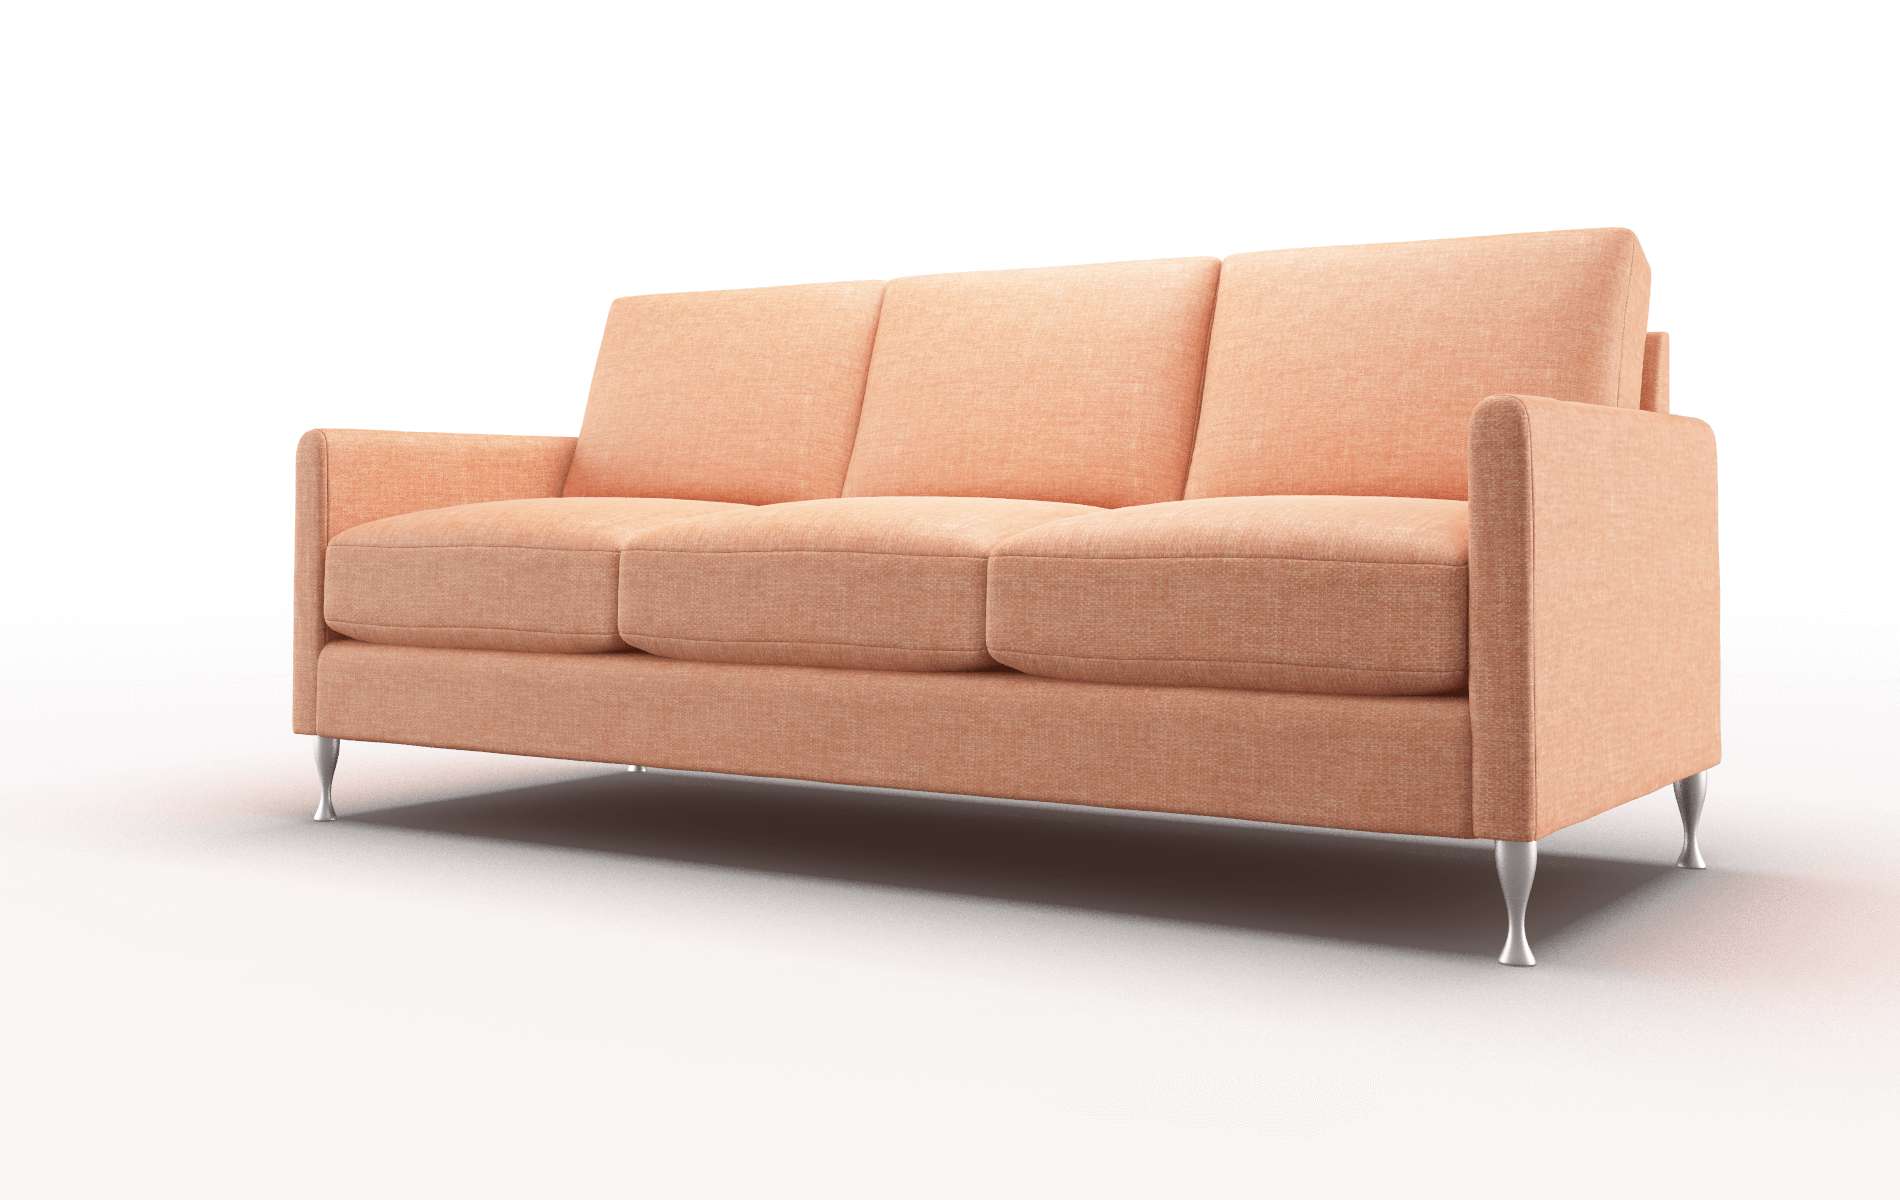 eureka sofa bed futon frame